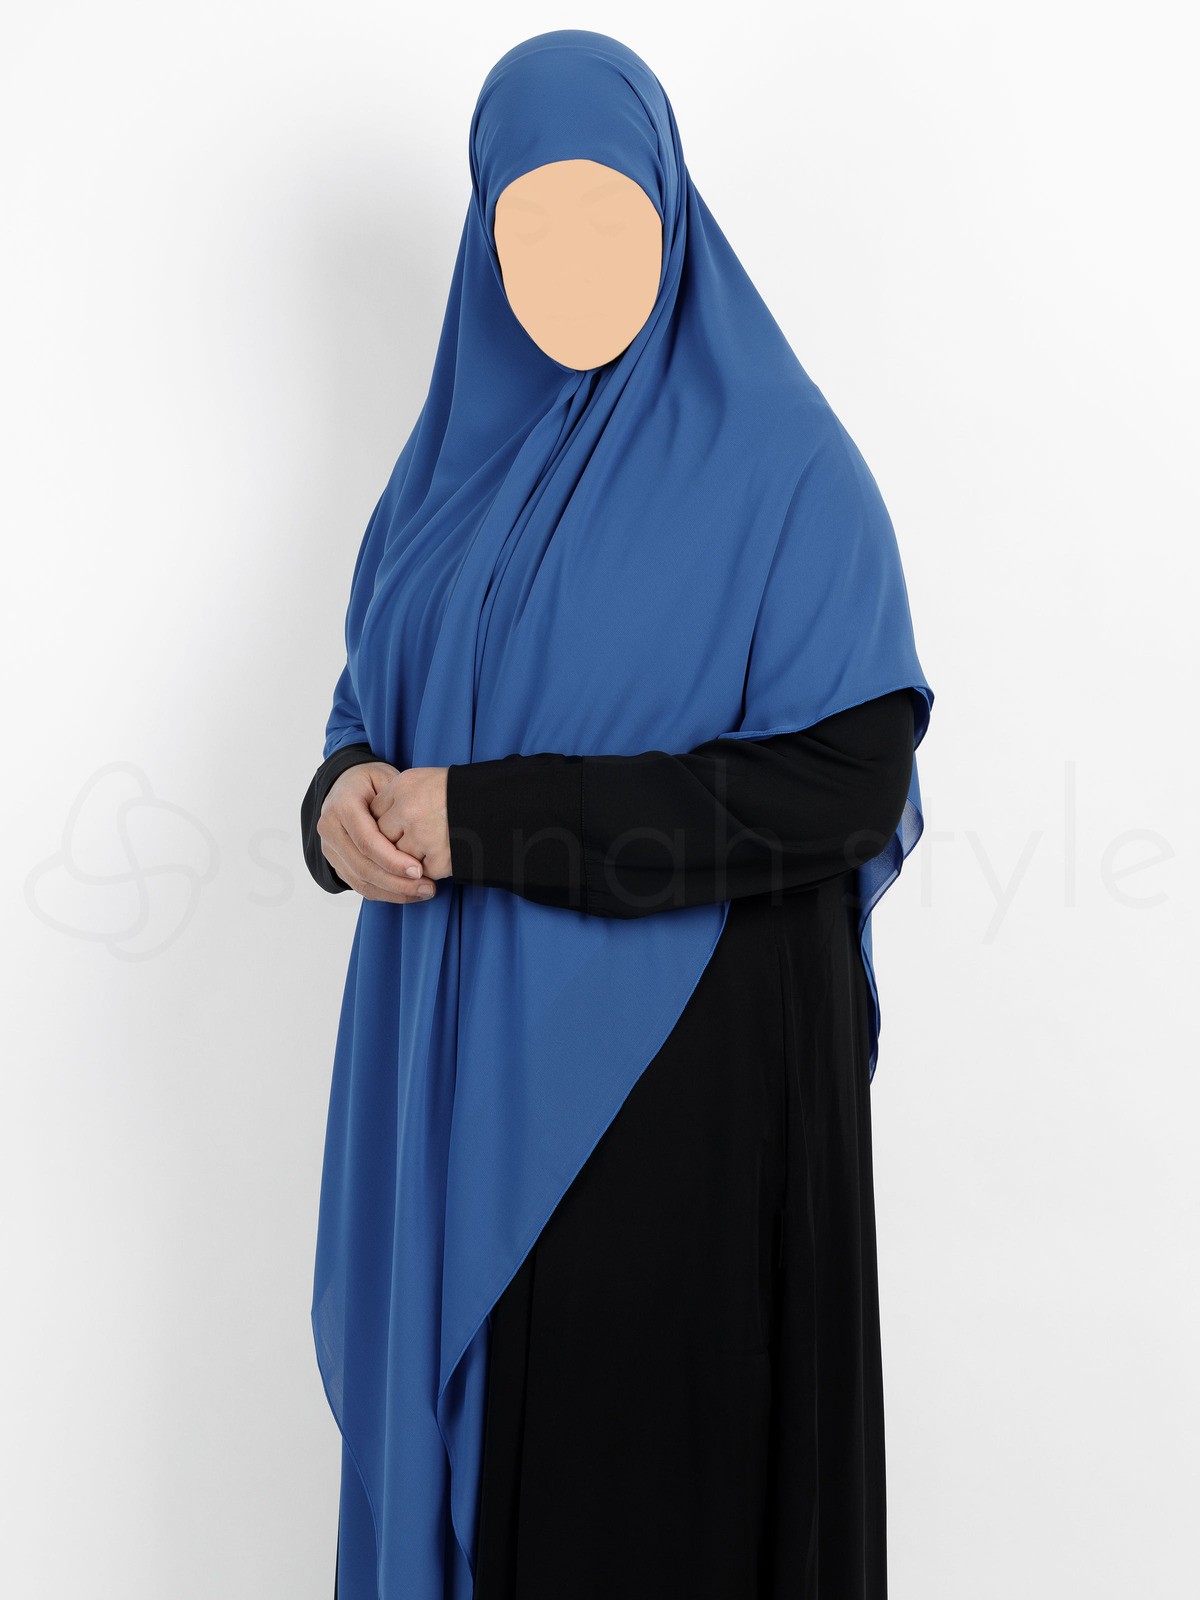 Sunnah Style - Essentials Square Hijab (Premium Chiffon) - XL (Blue Jay)